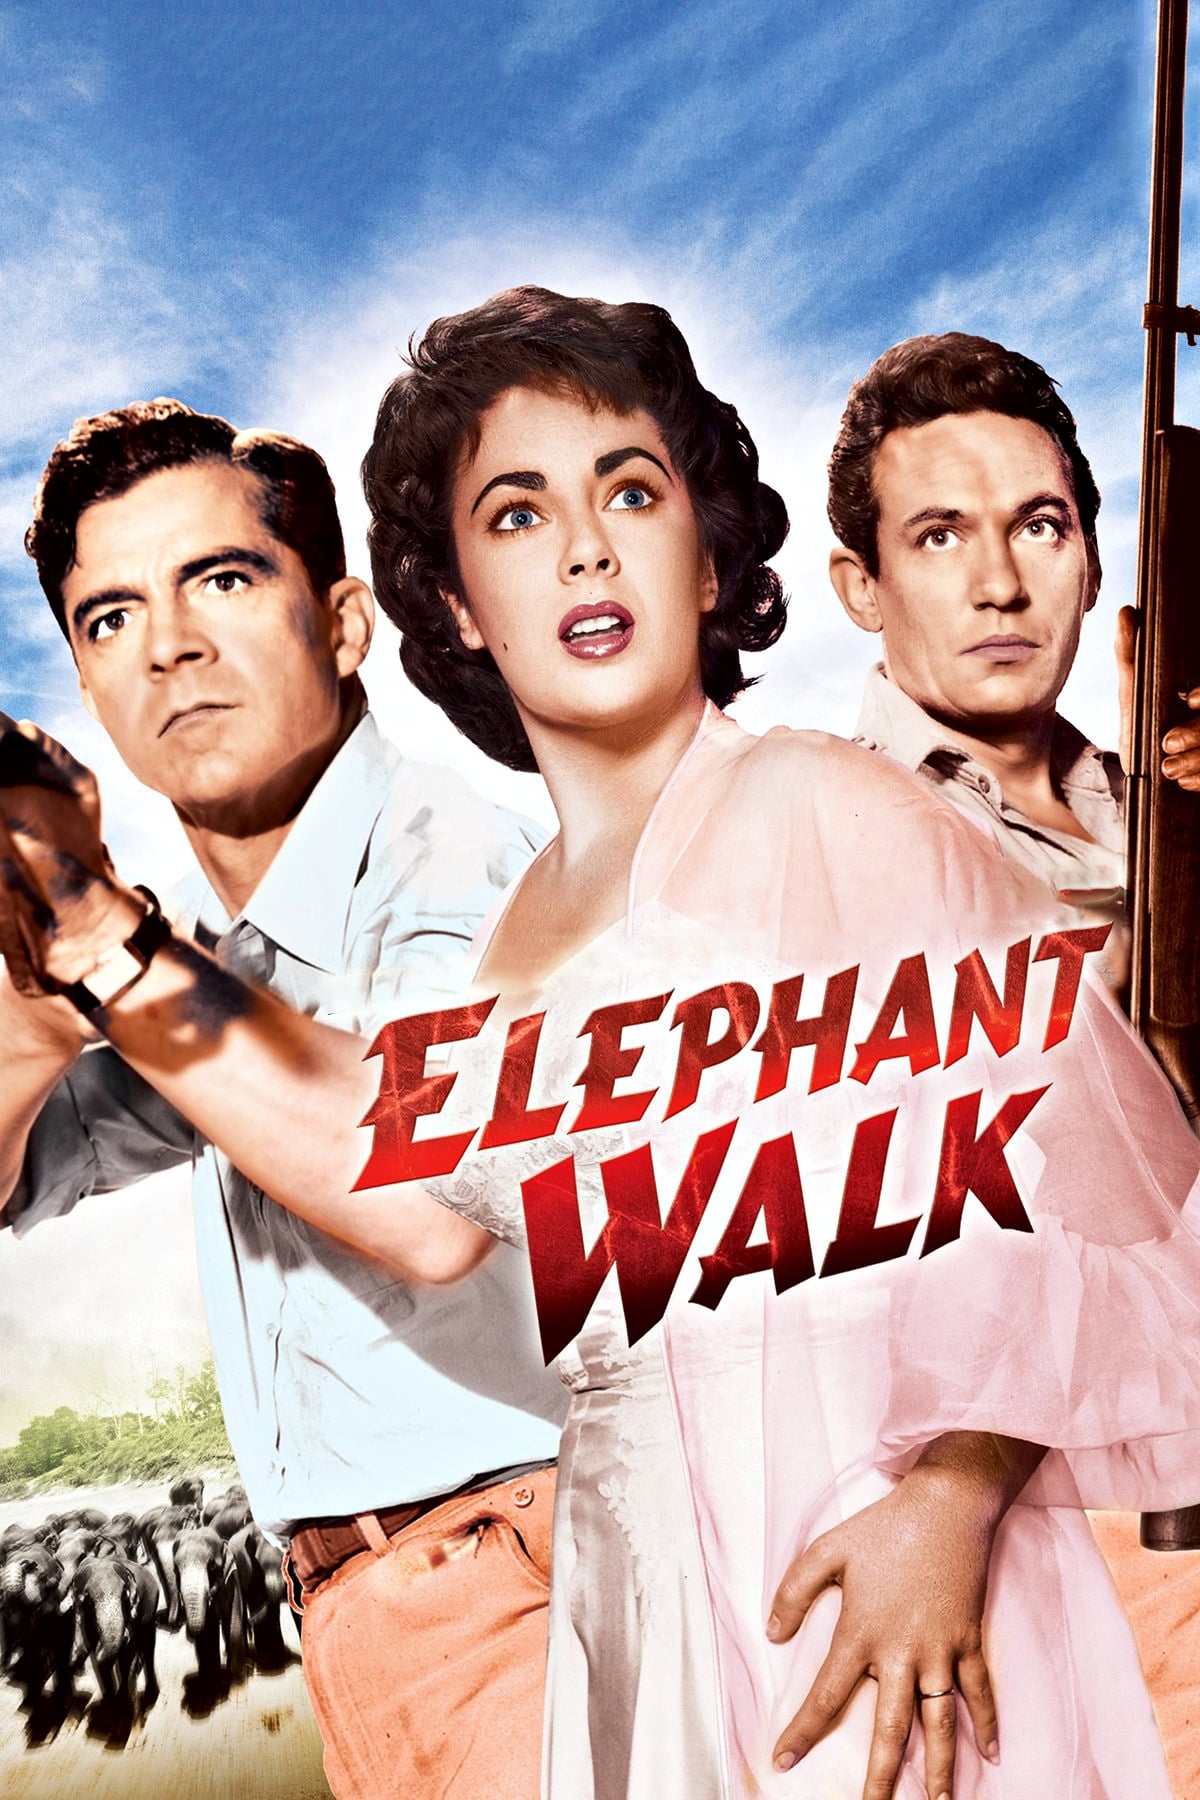 Elephant Walk (1954)